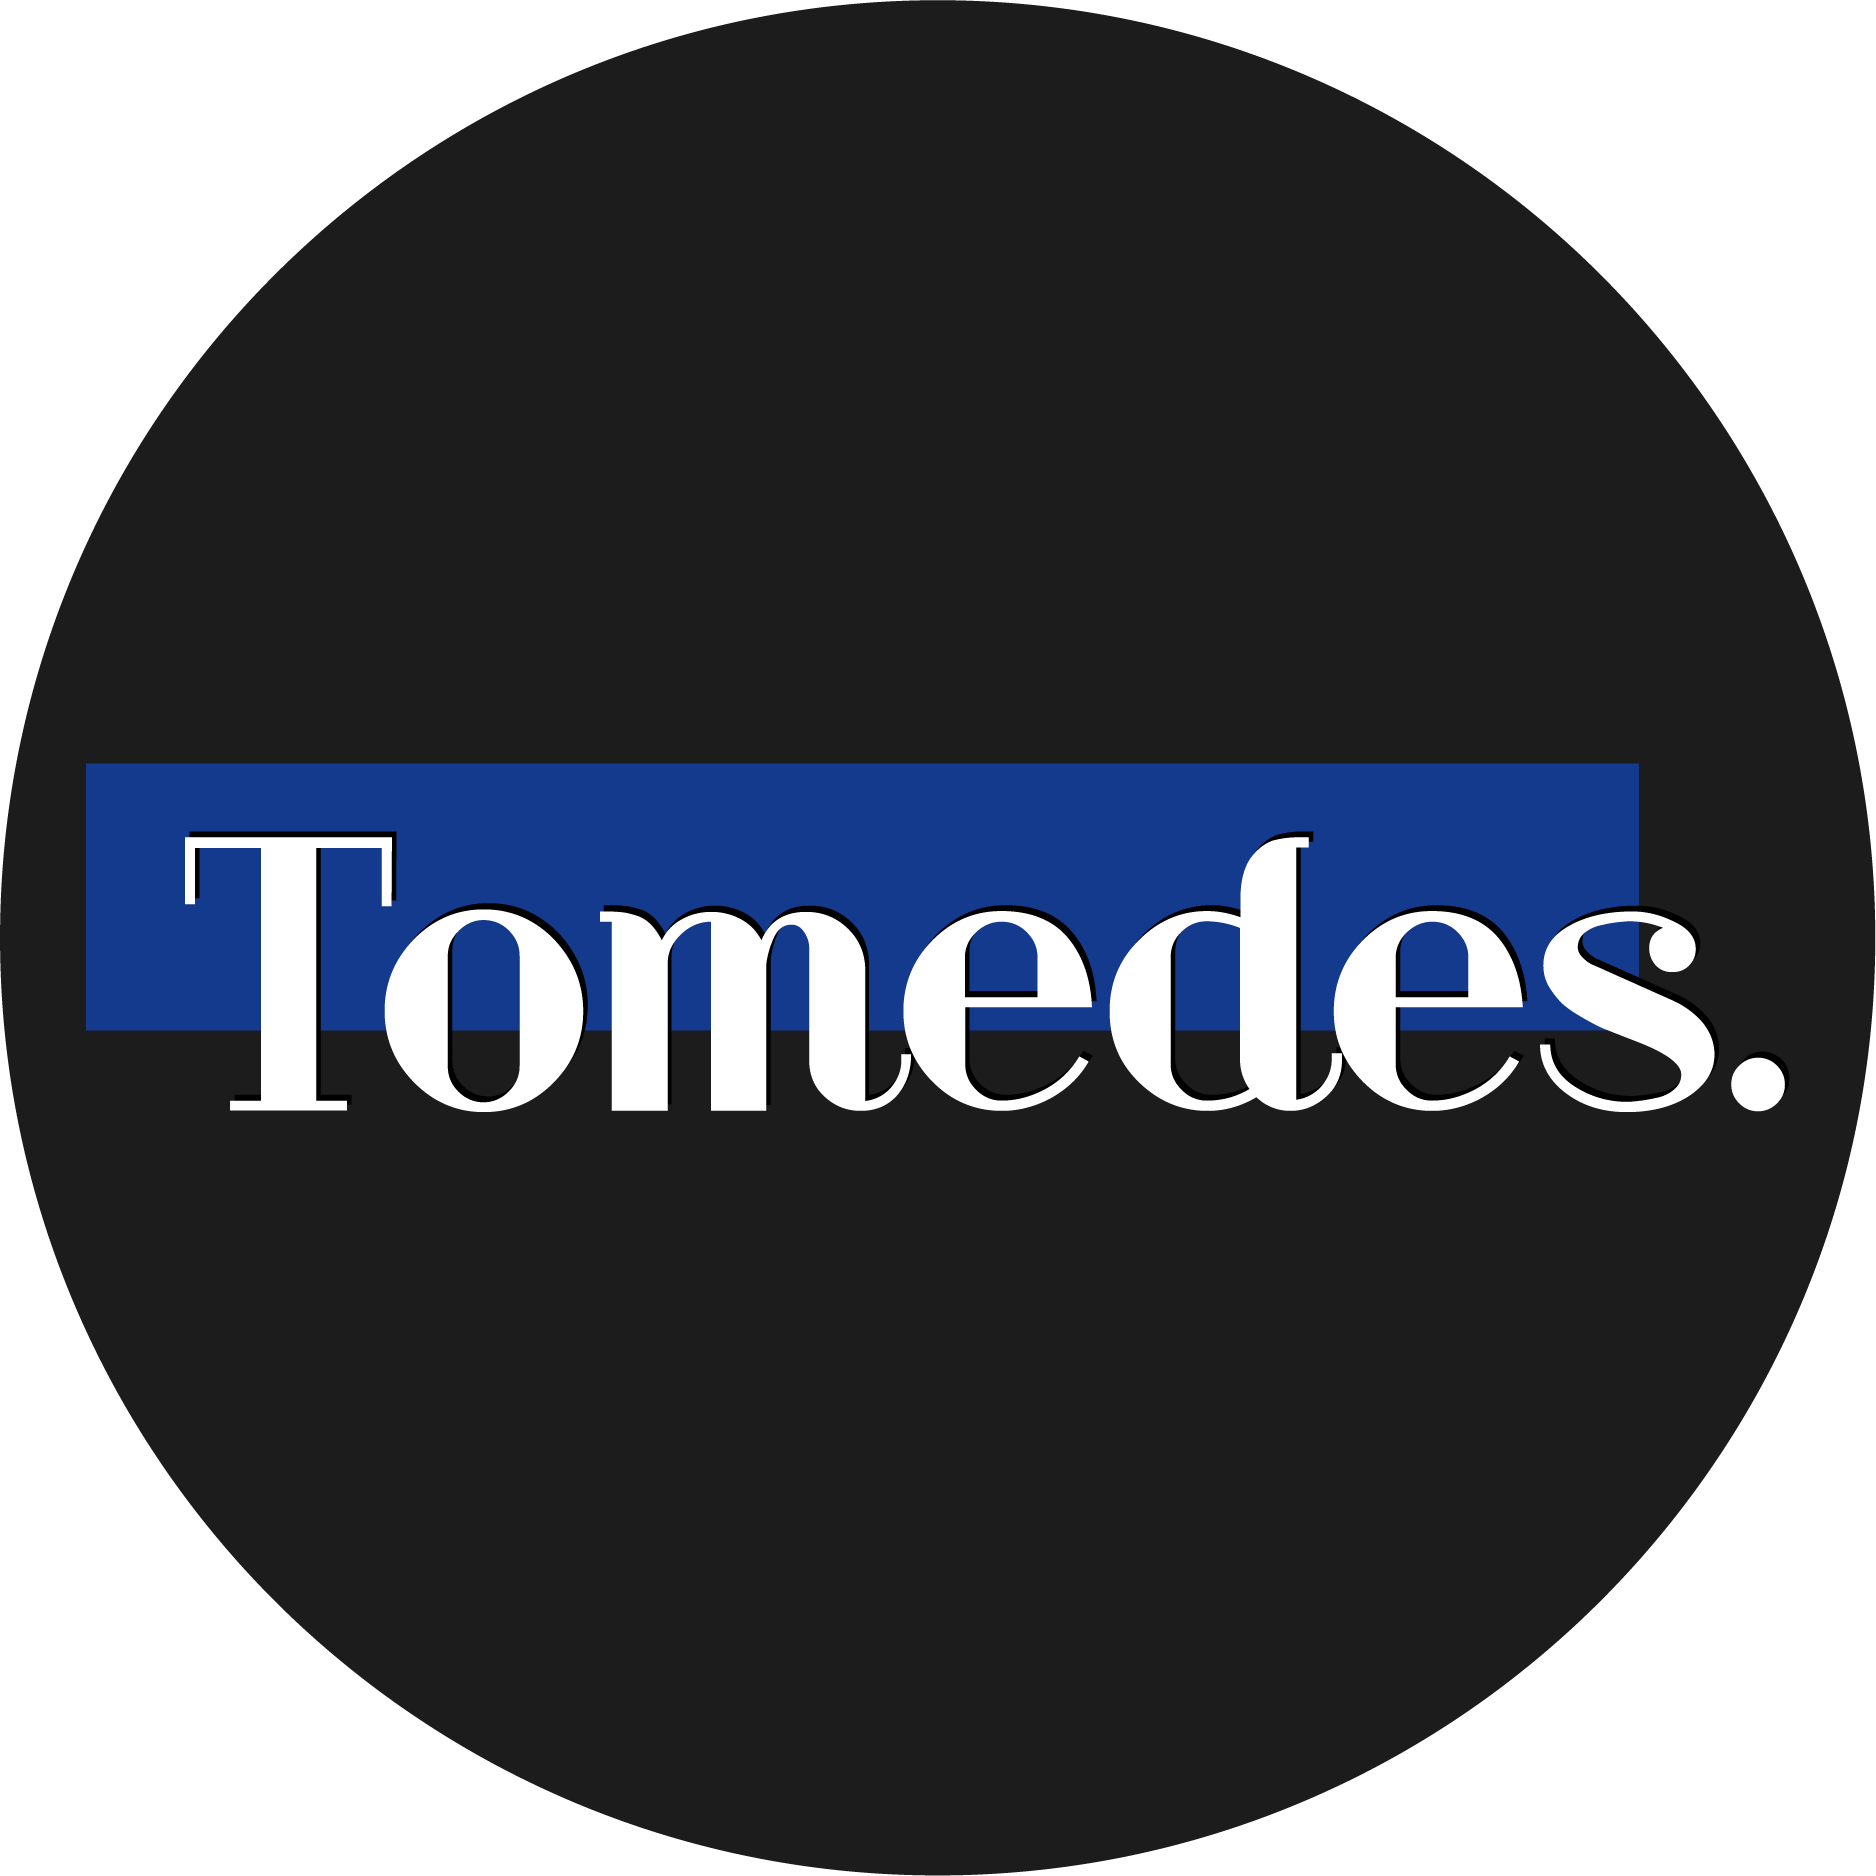 Tomedes Translation Company Logo